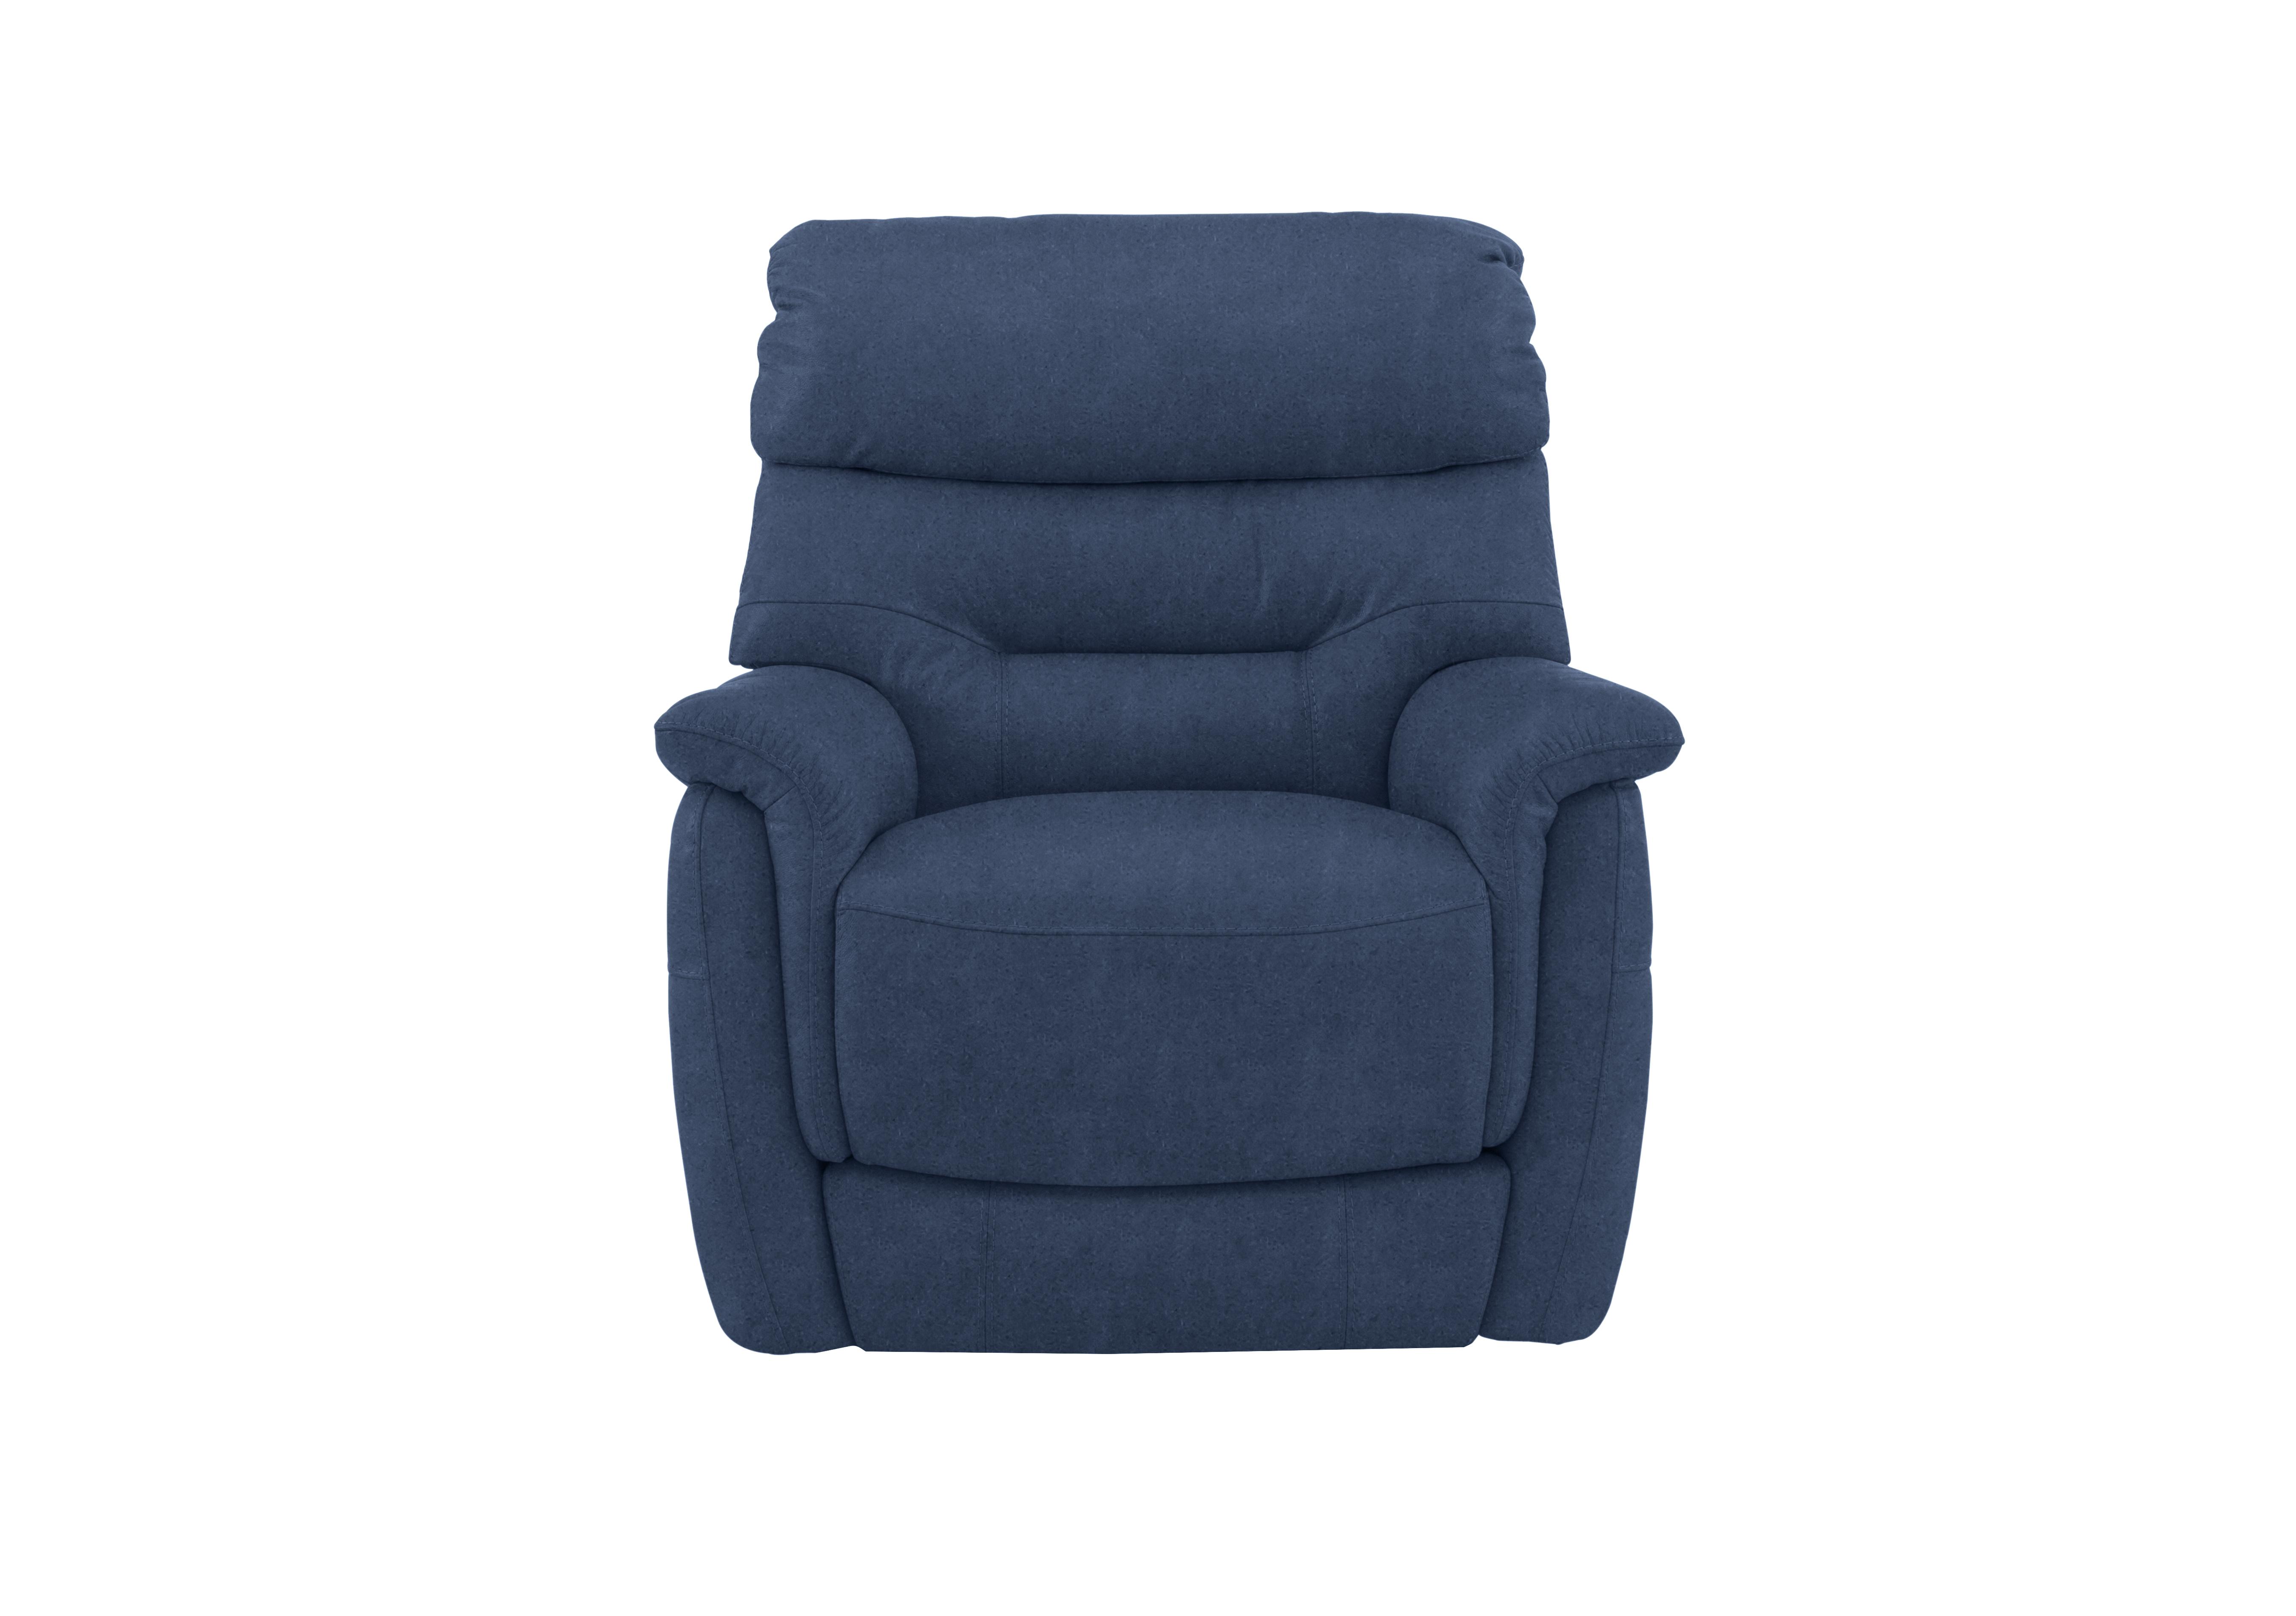 Chicago Fabric Armchair in Bfa-Blj-R10 Blue on Furniture Village